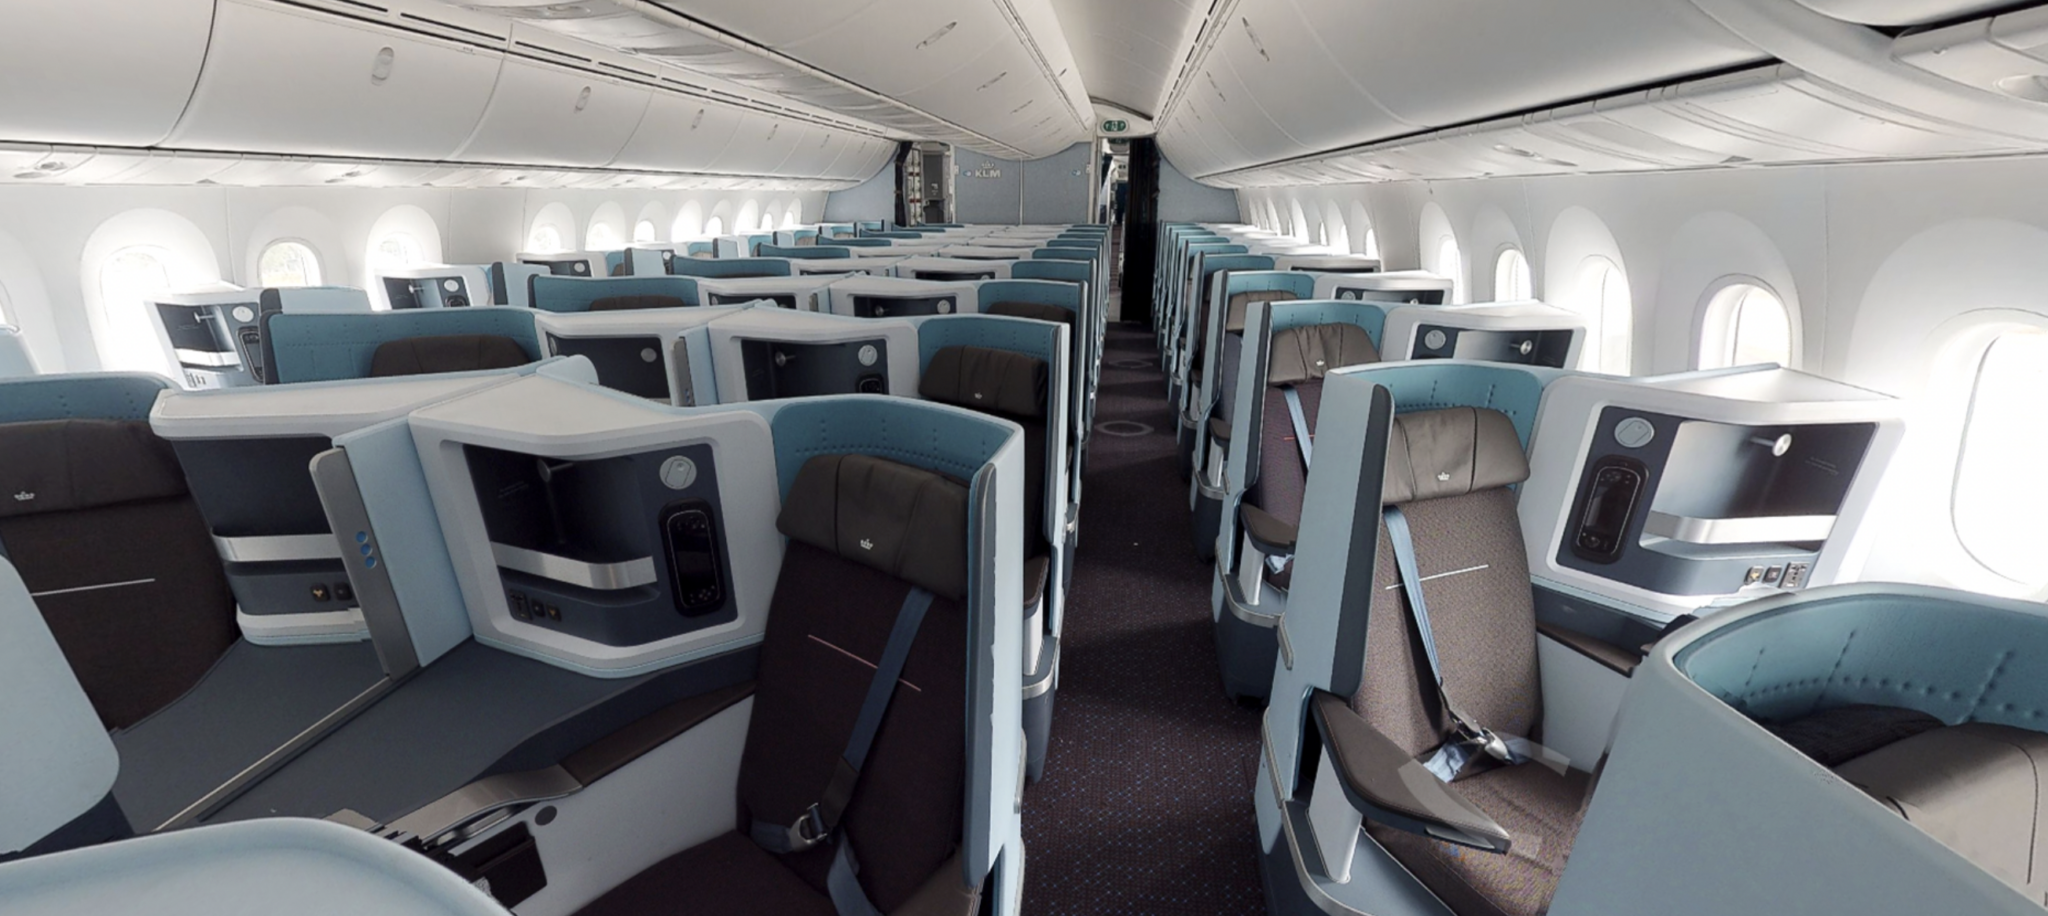 KLM-787-Business-Class-Cabin